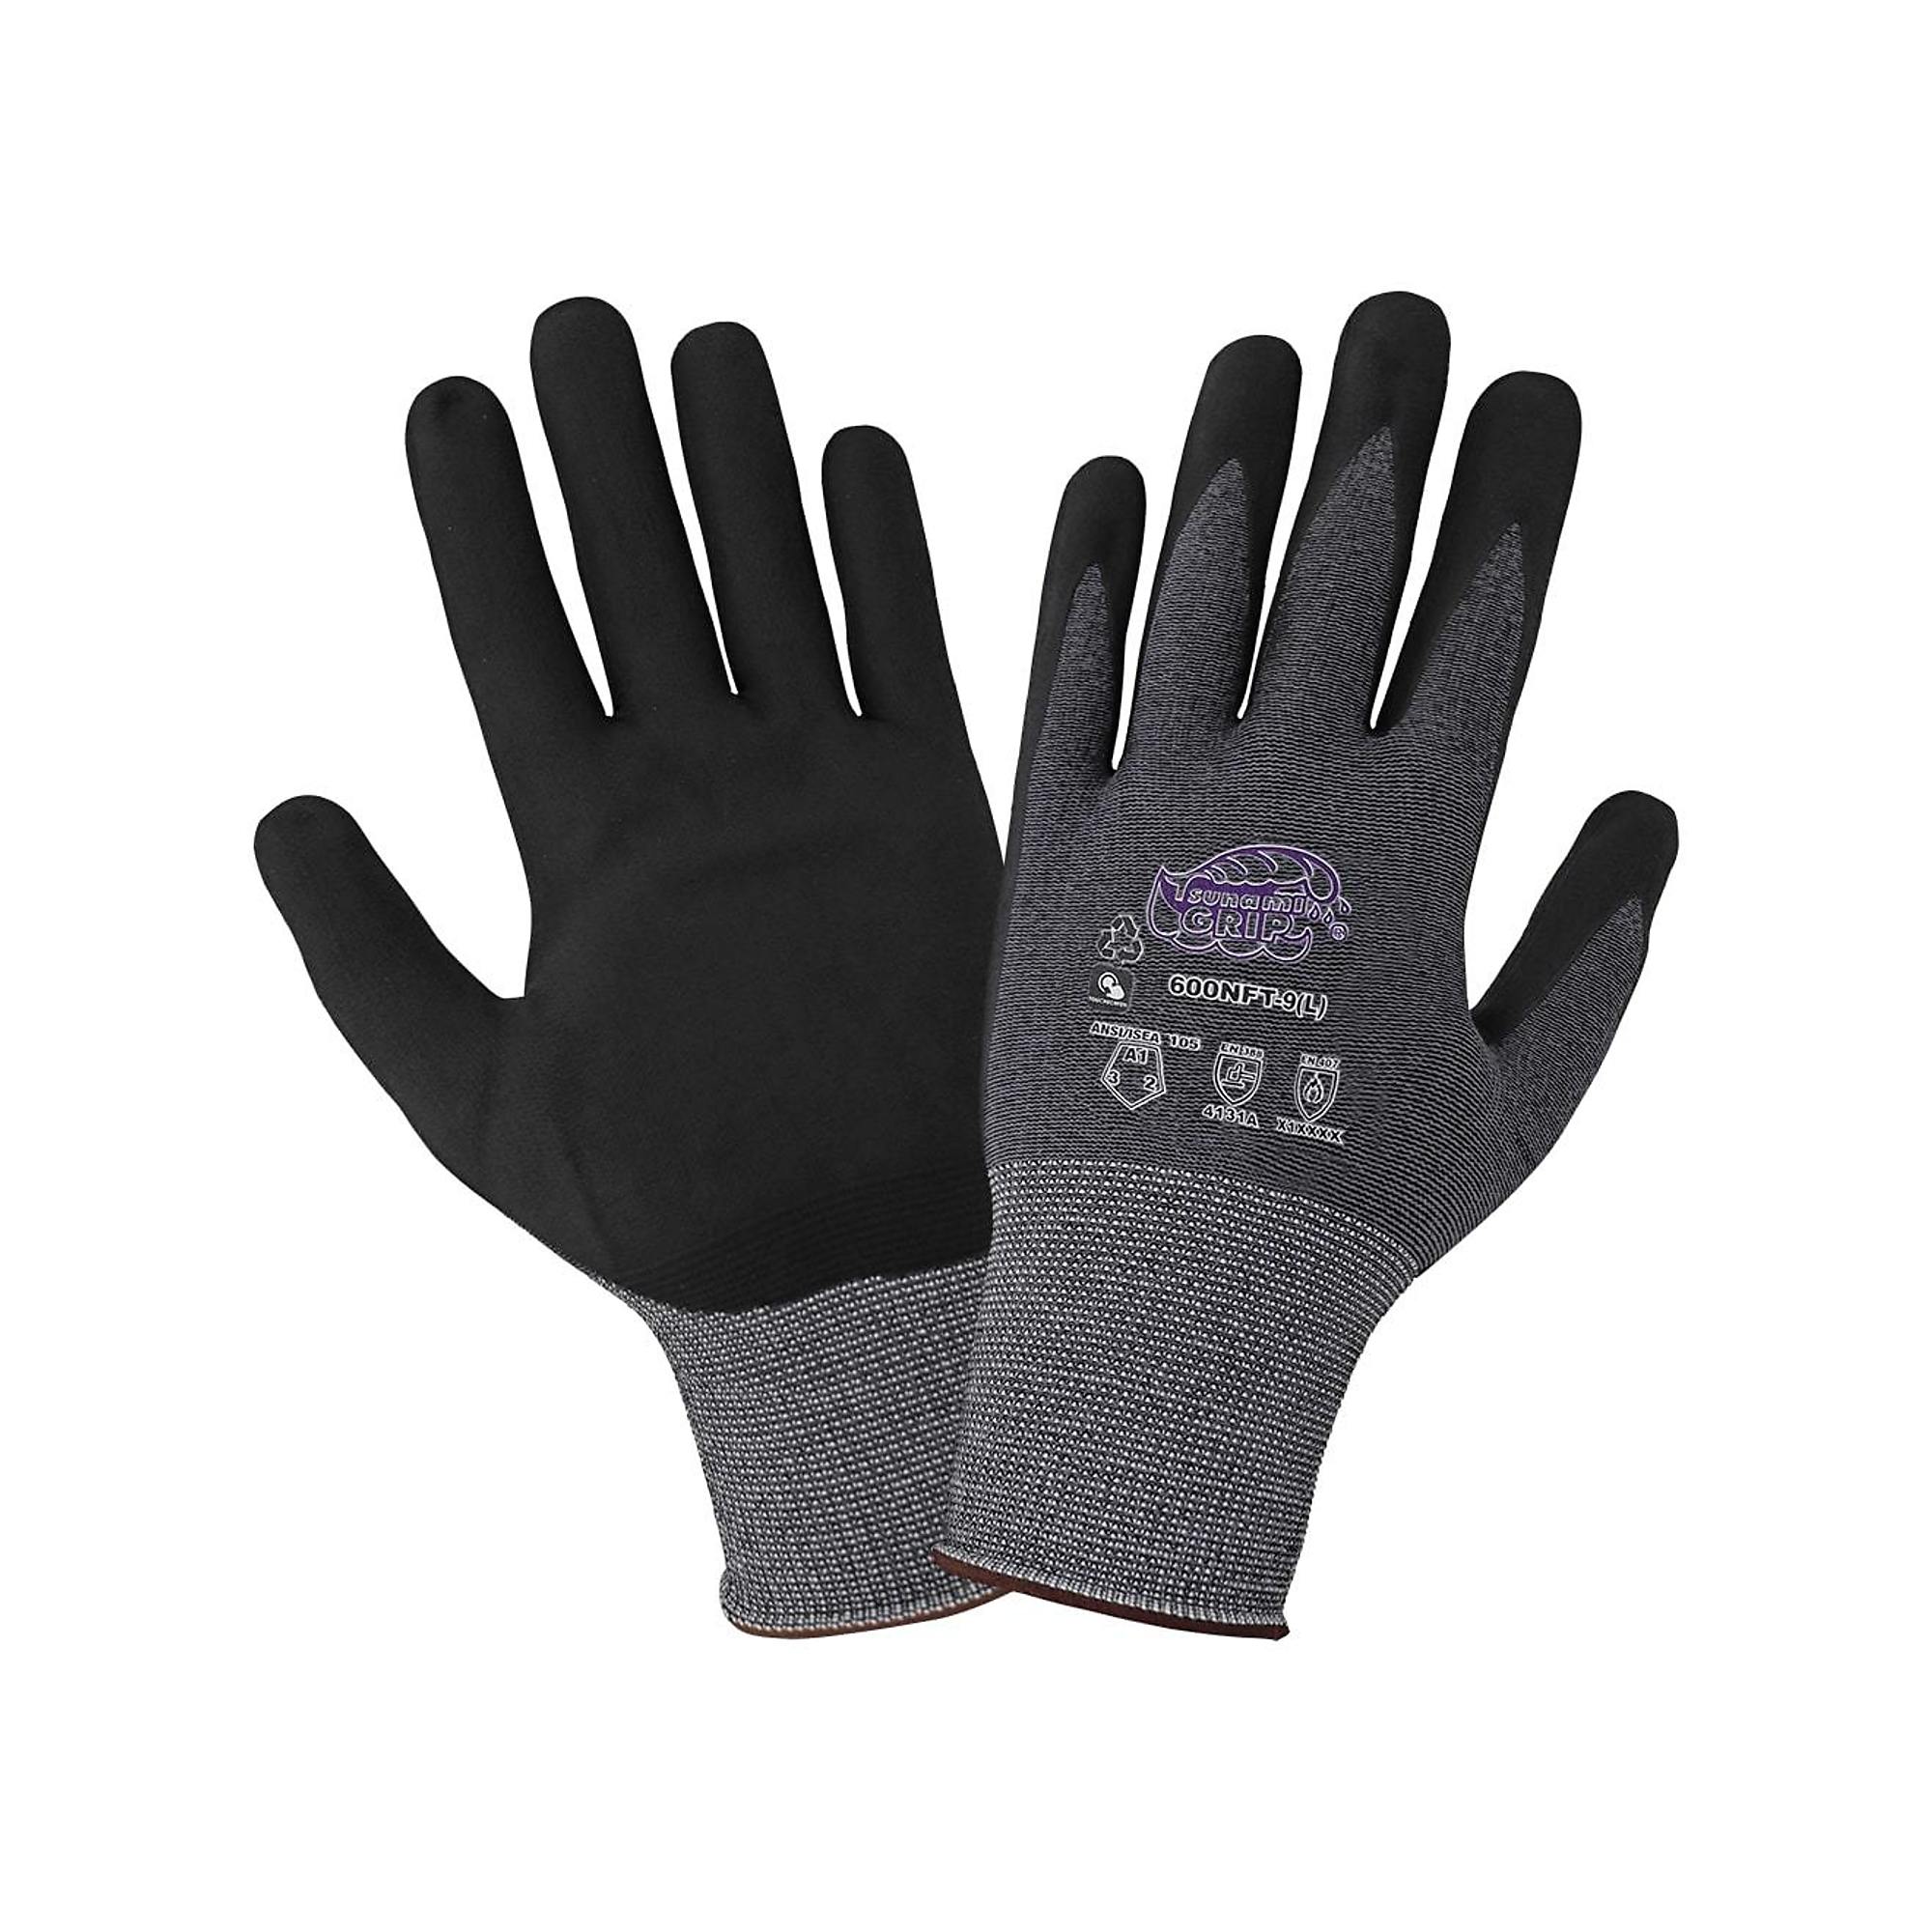 Global Glove Tsunami Grip , Tsunami Grip Lightweight, Foam Nitrile Gloves - 12 Pairs, Size M, Color Gray, Included (qty.) 12 Model 600NFT-8(M)